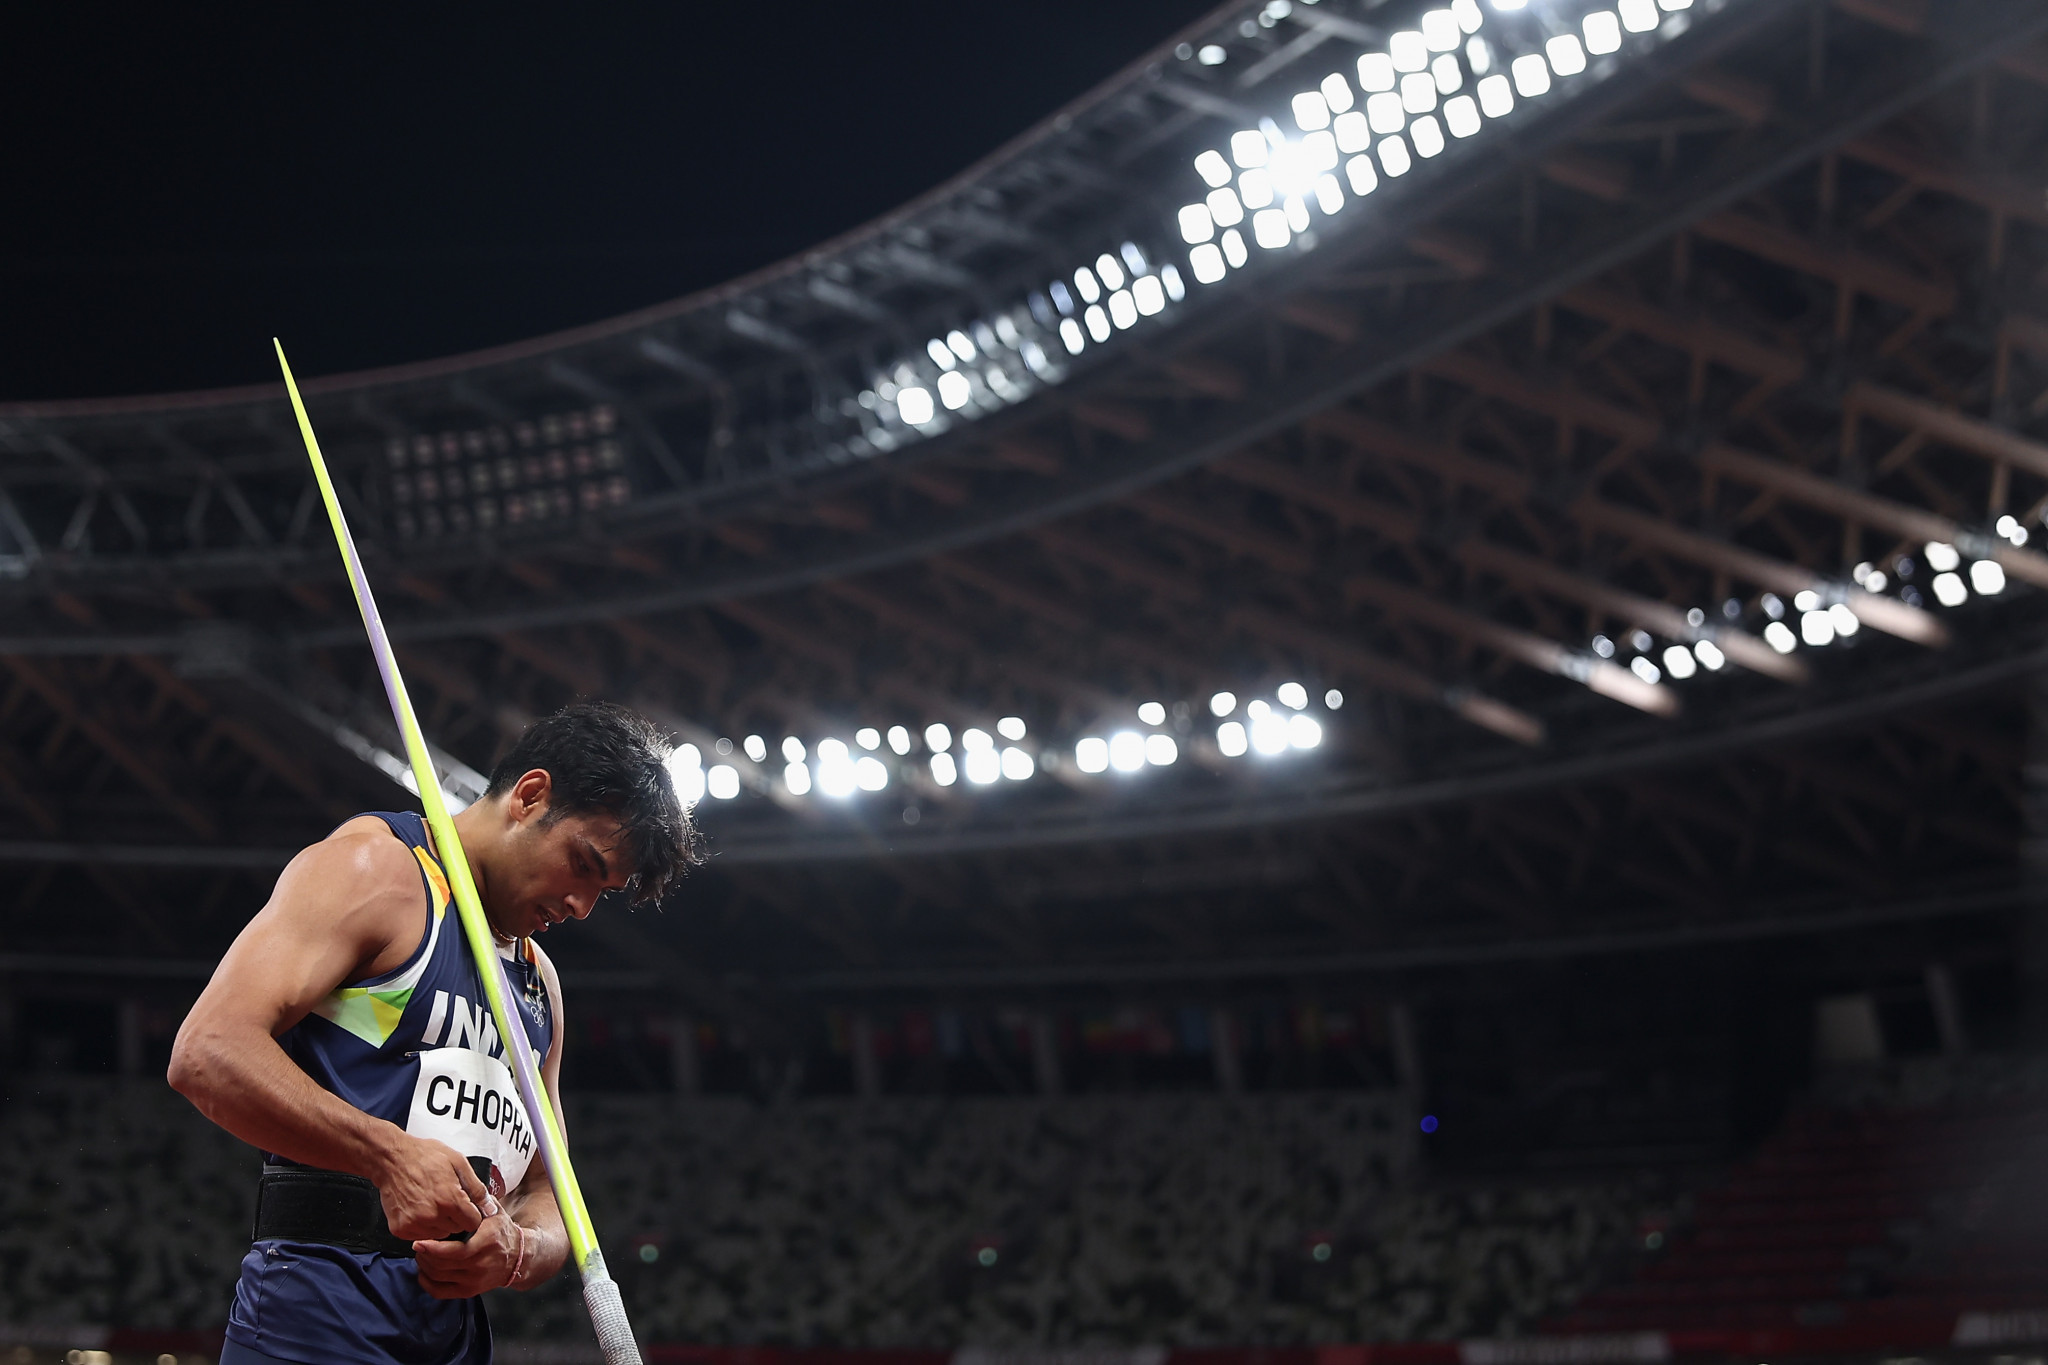 Tokyo 2020 champion Chopra donates javelin to Olympic Museum